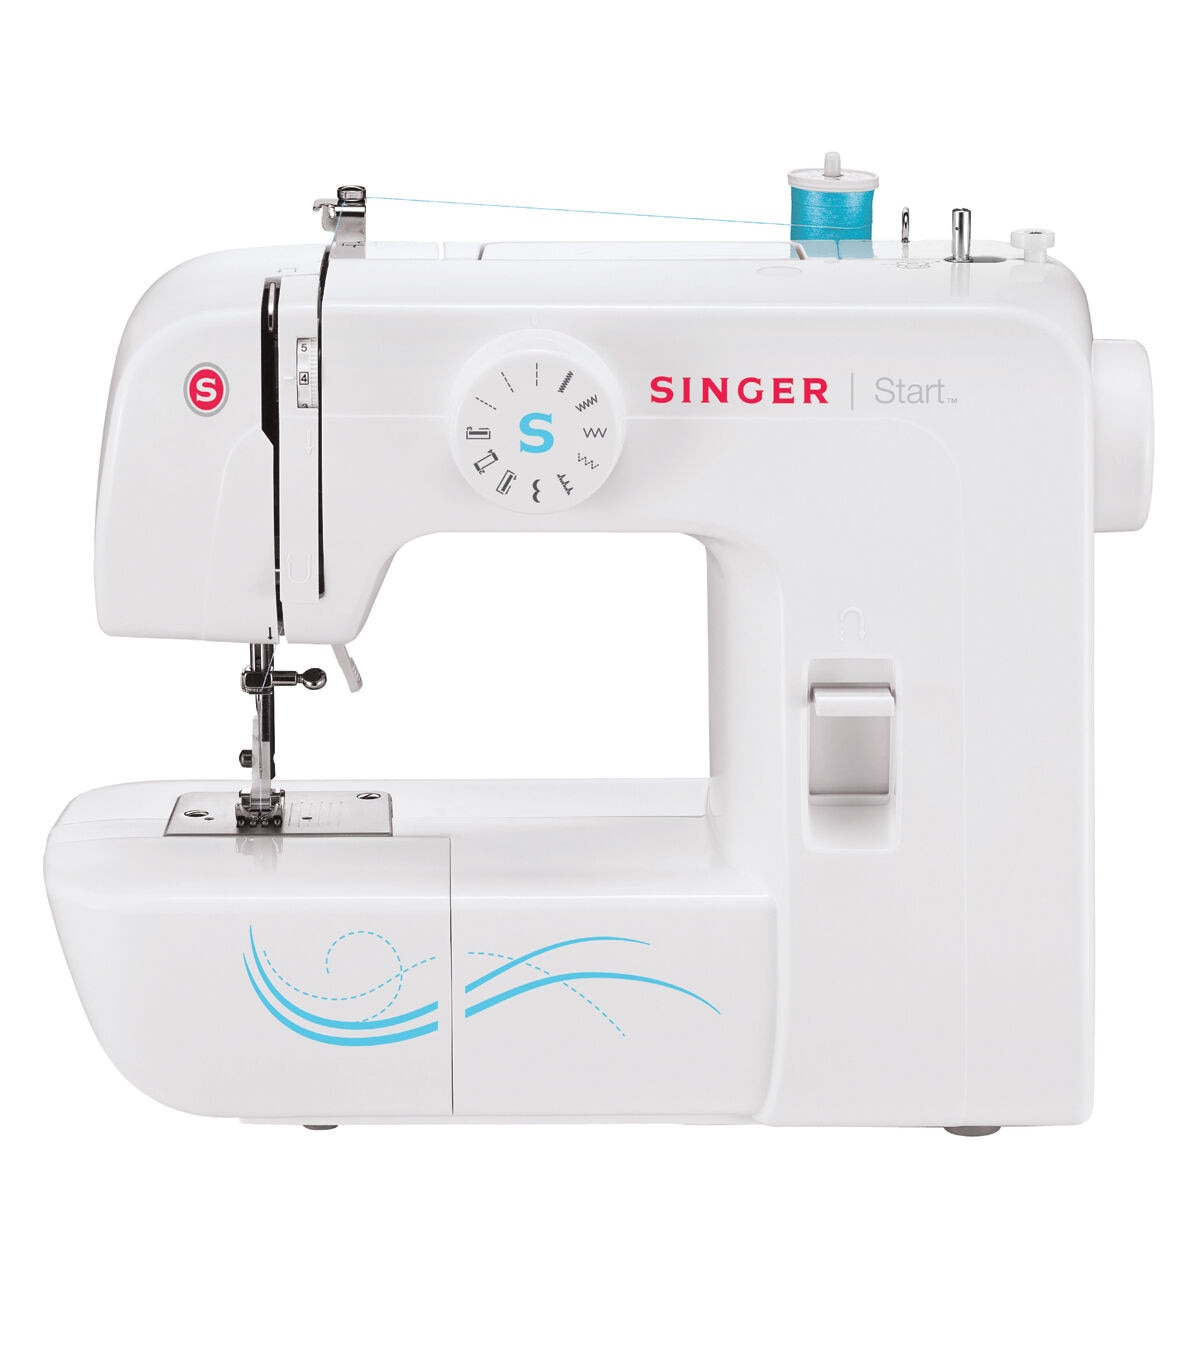 Singer 1304 Start Essential Sewing Machine - Heavy Duty - Beginners - At JOANN